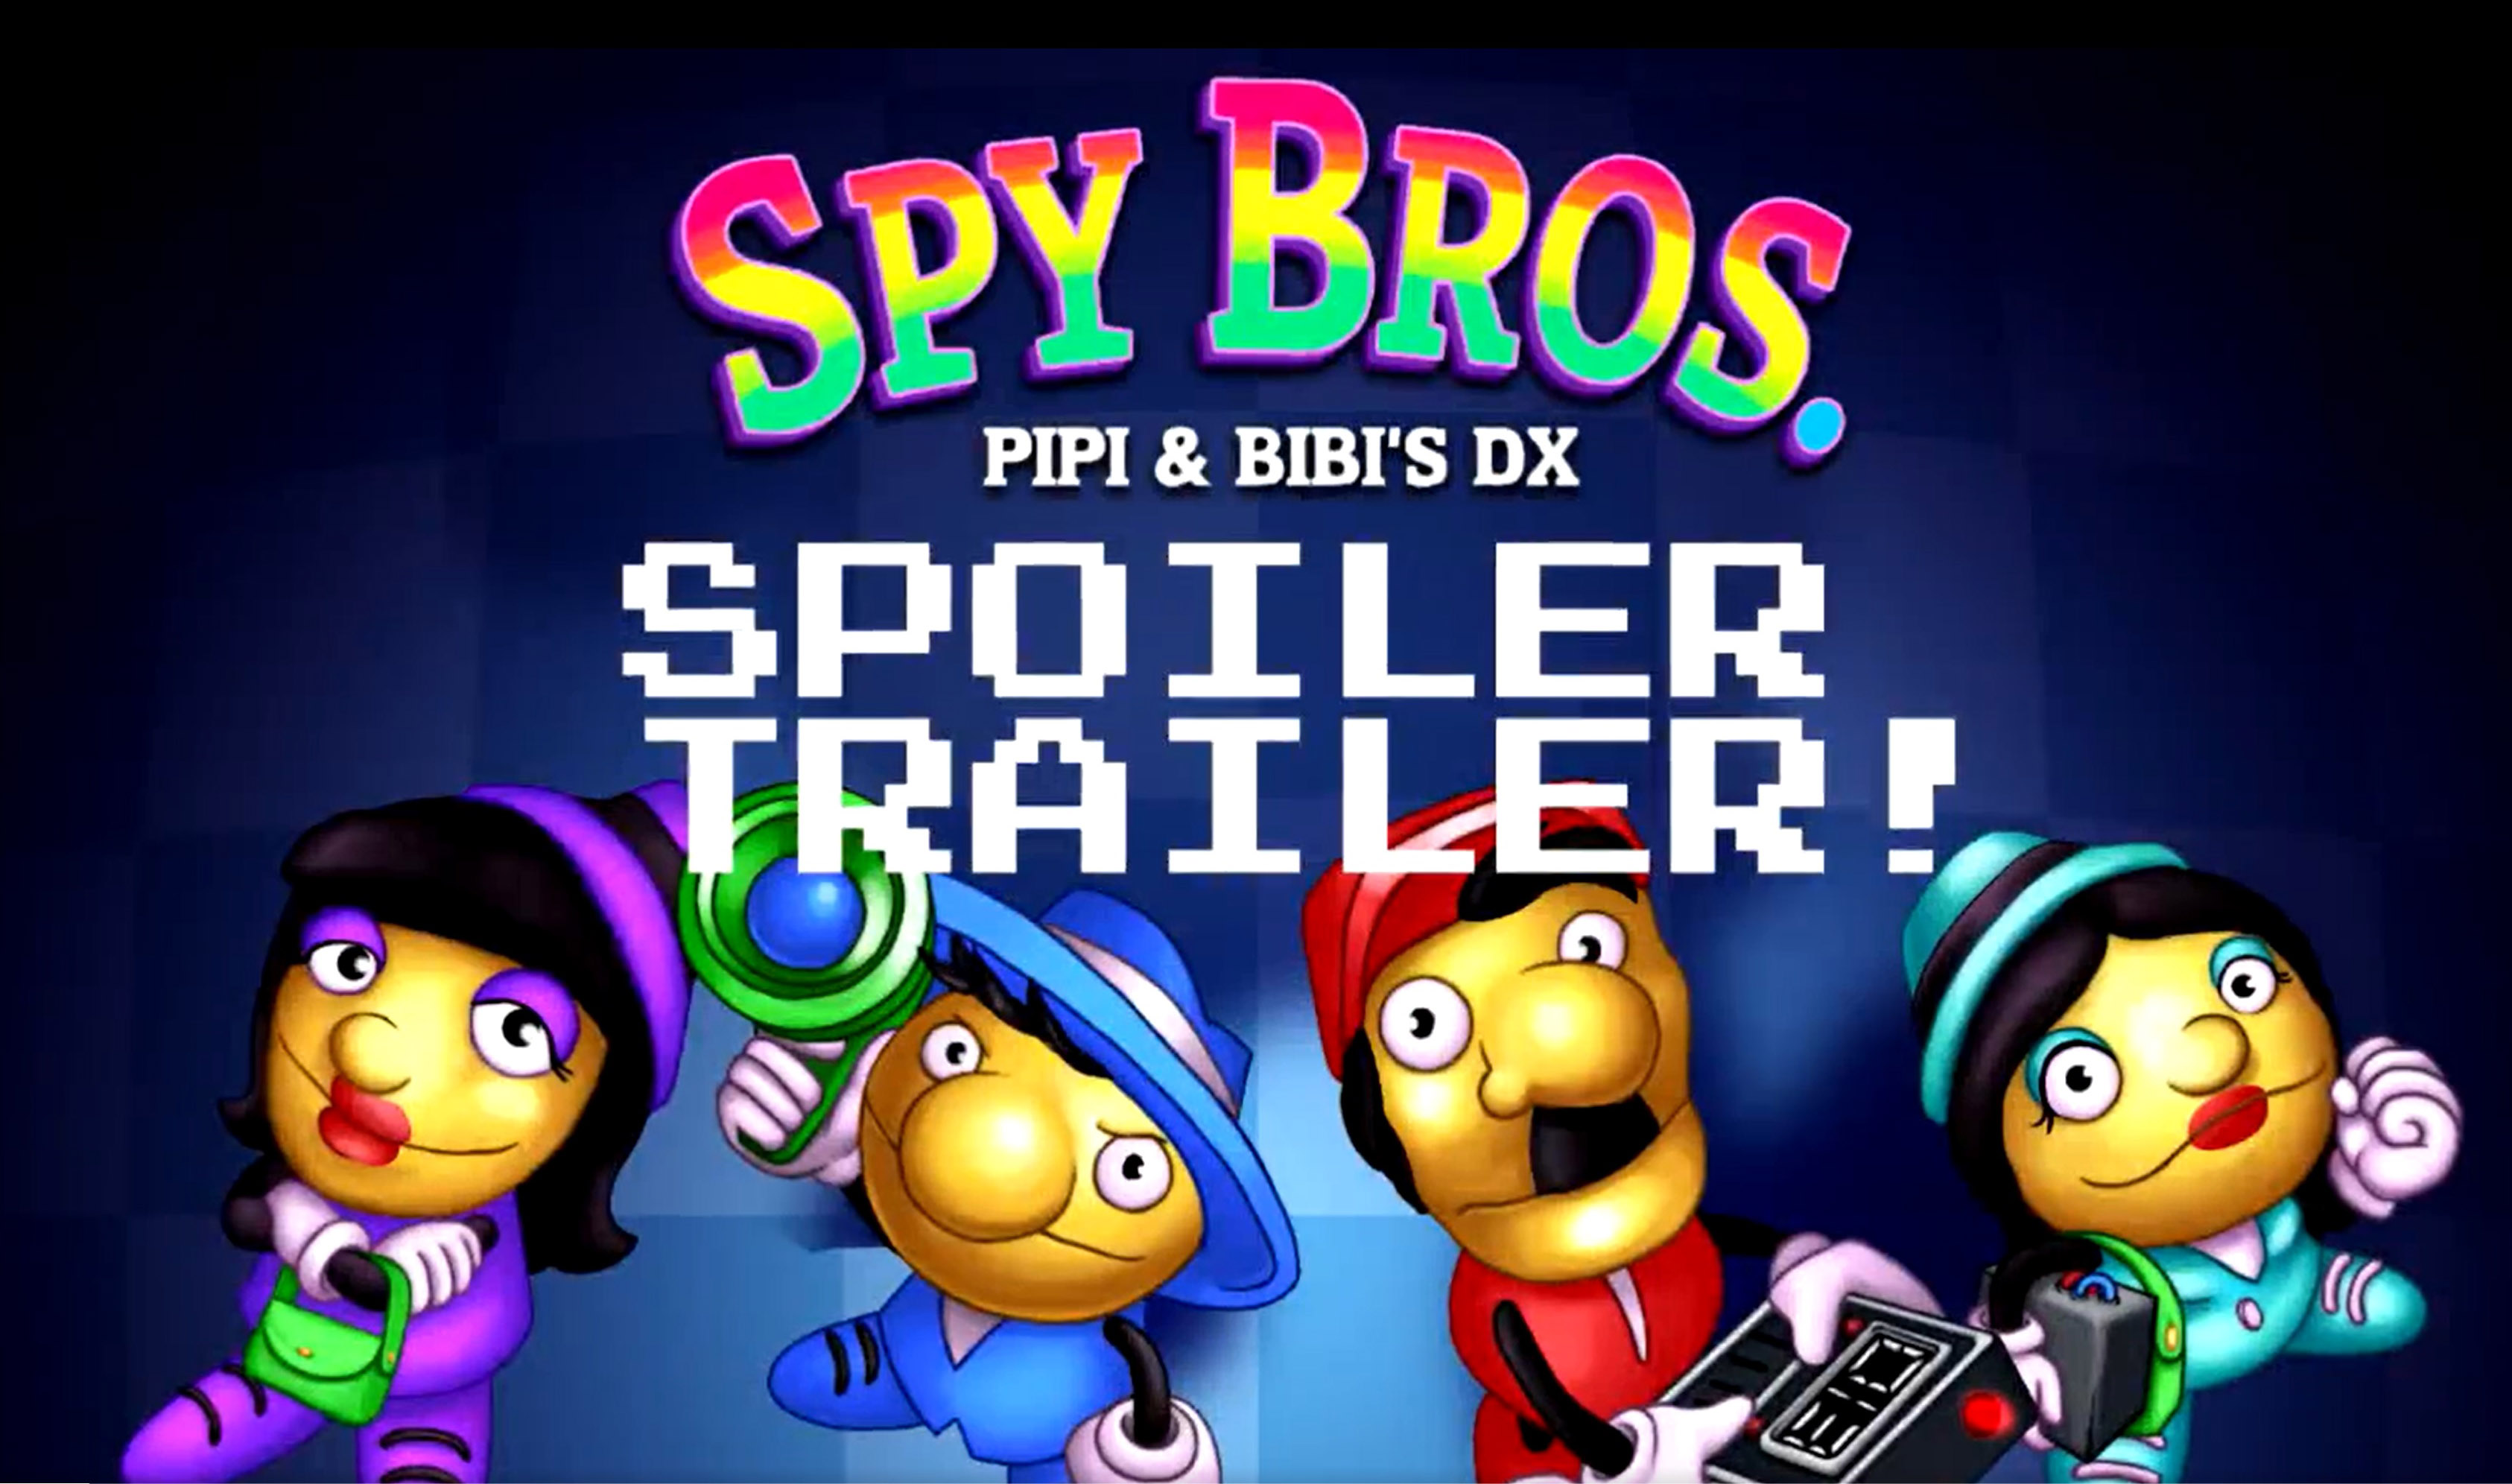 『SPY BROS. PIPI&BIBI'S DX』のネタバレトレーラーを公開！